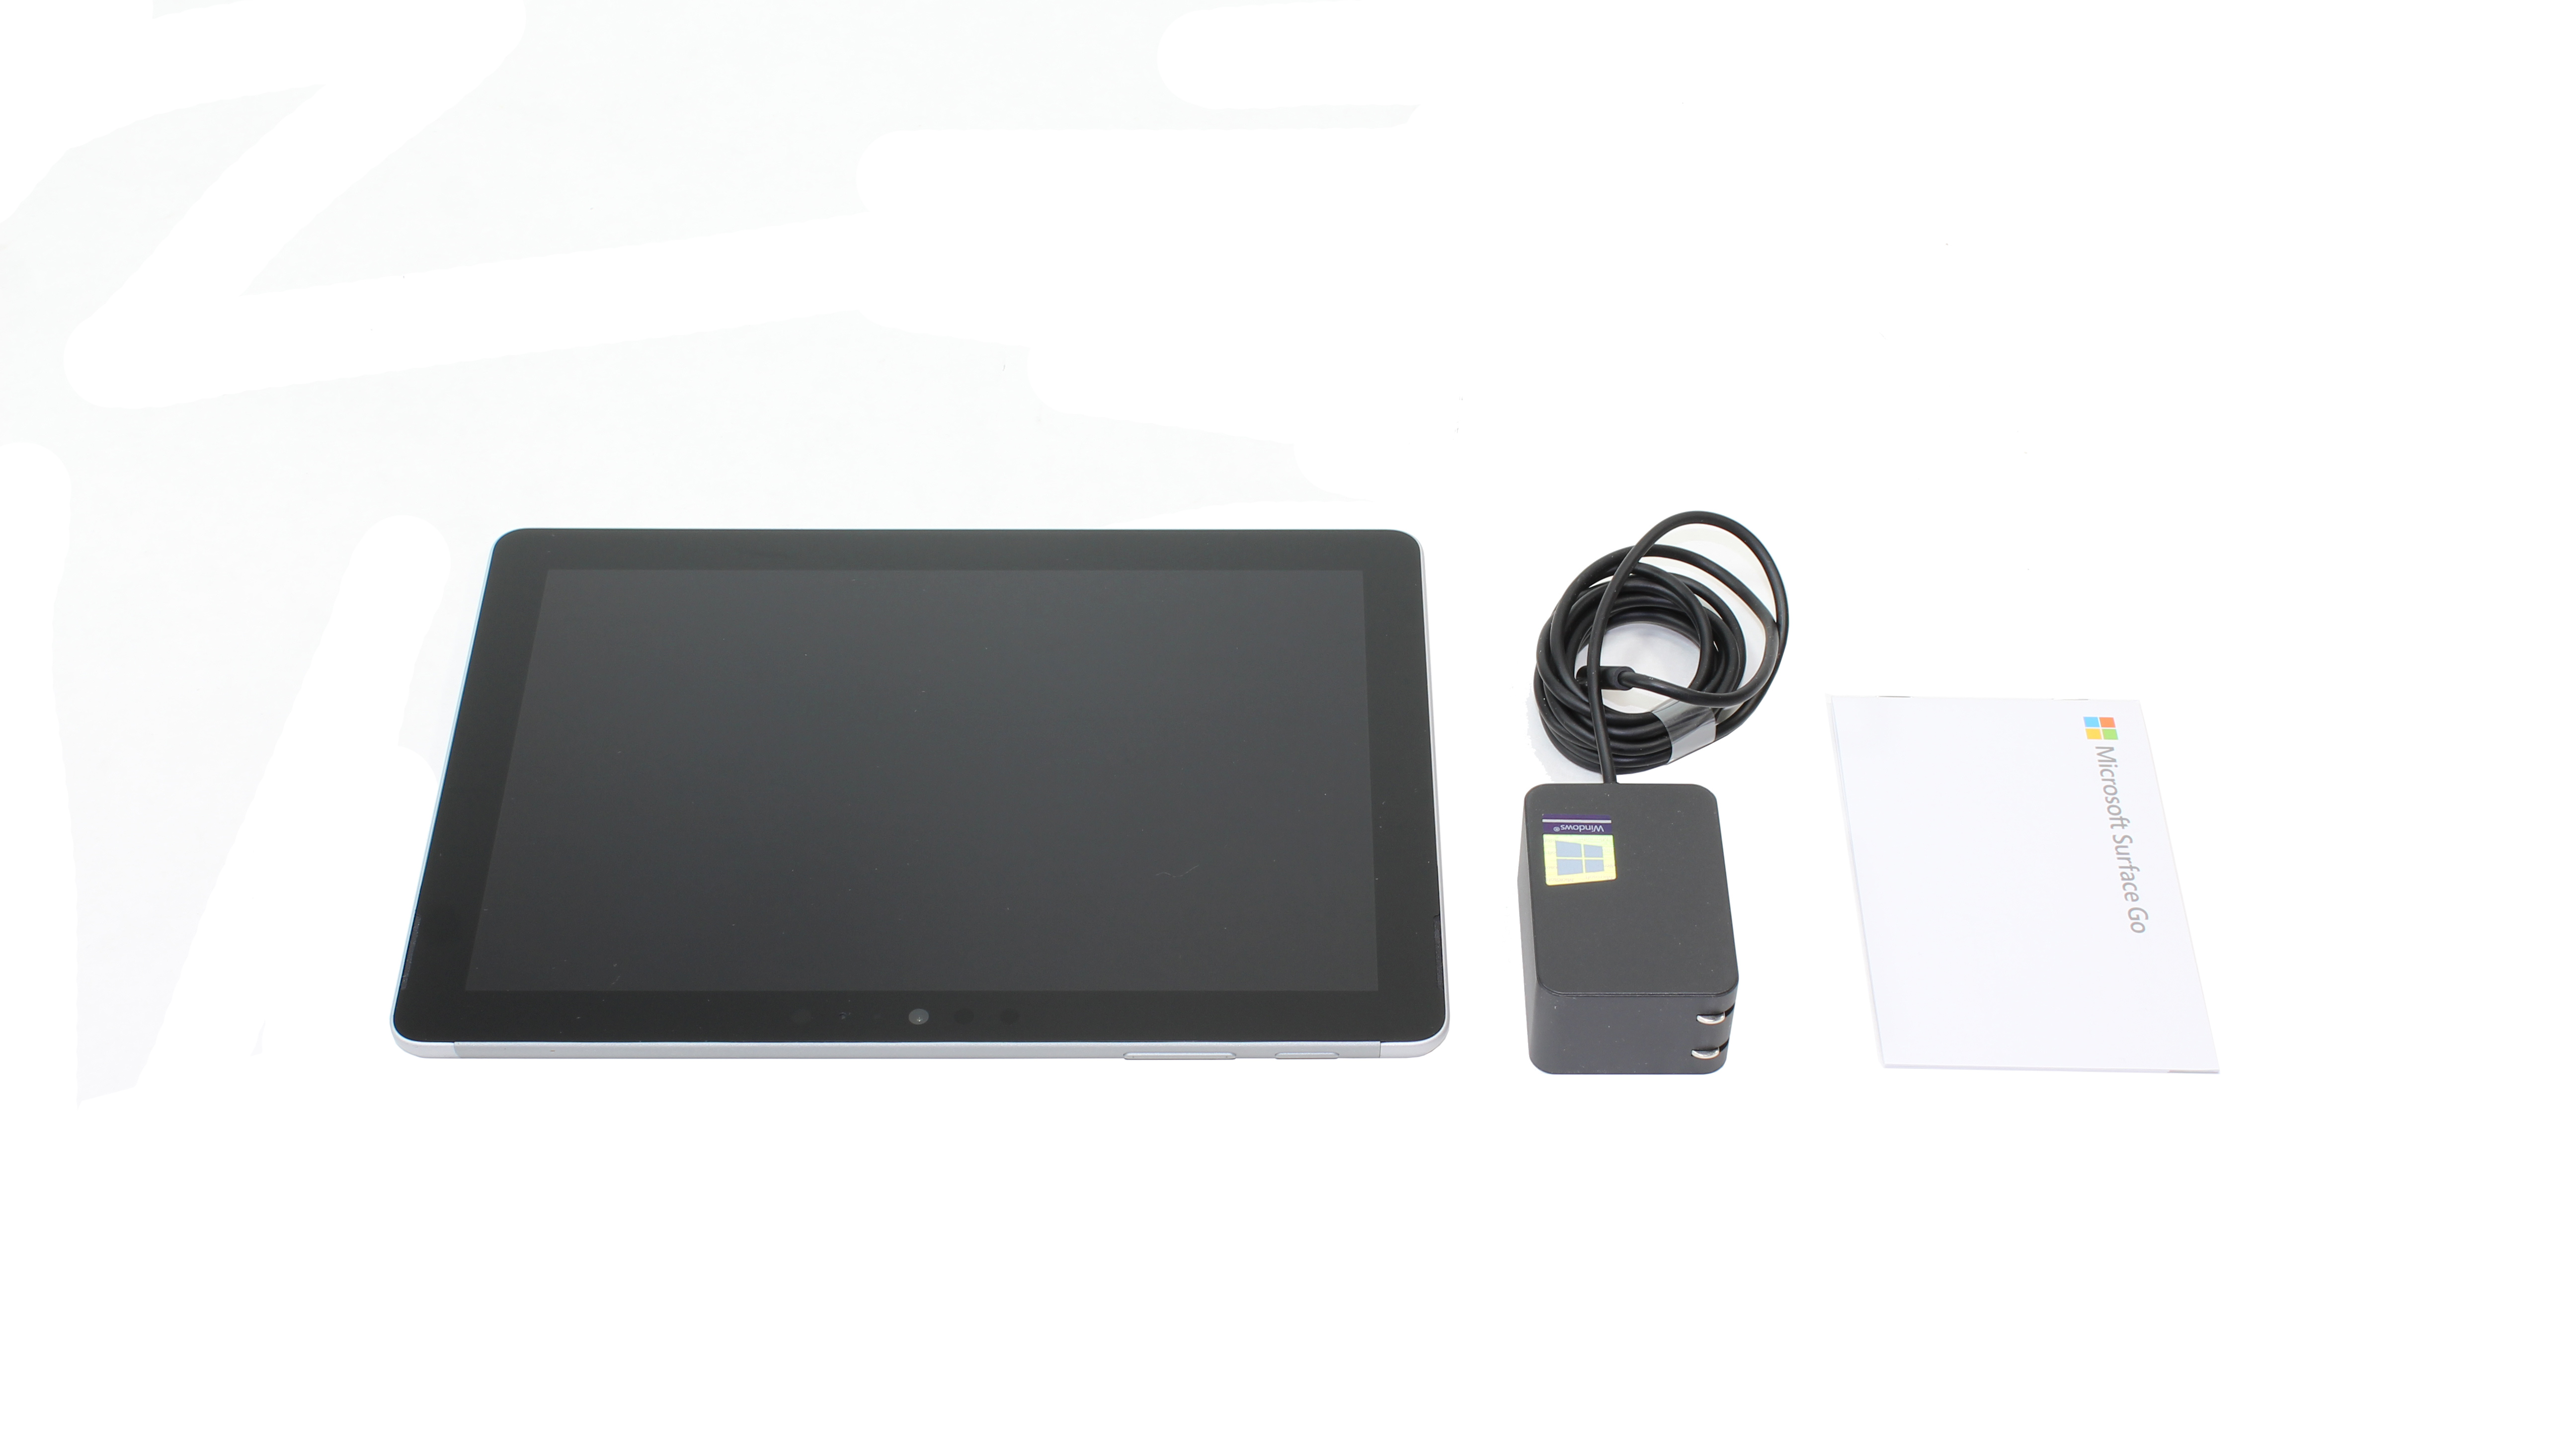 Microsoft Surface Go 10" Touch Intel Pentium Gold 4415Y 1.6GHz RAM 4Gb eMMC 64Gb Win10 JST-00001